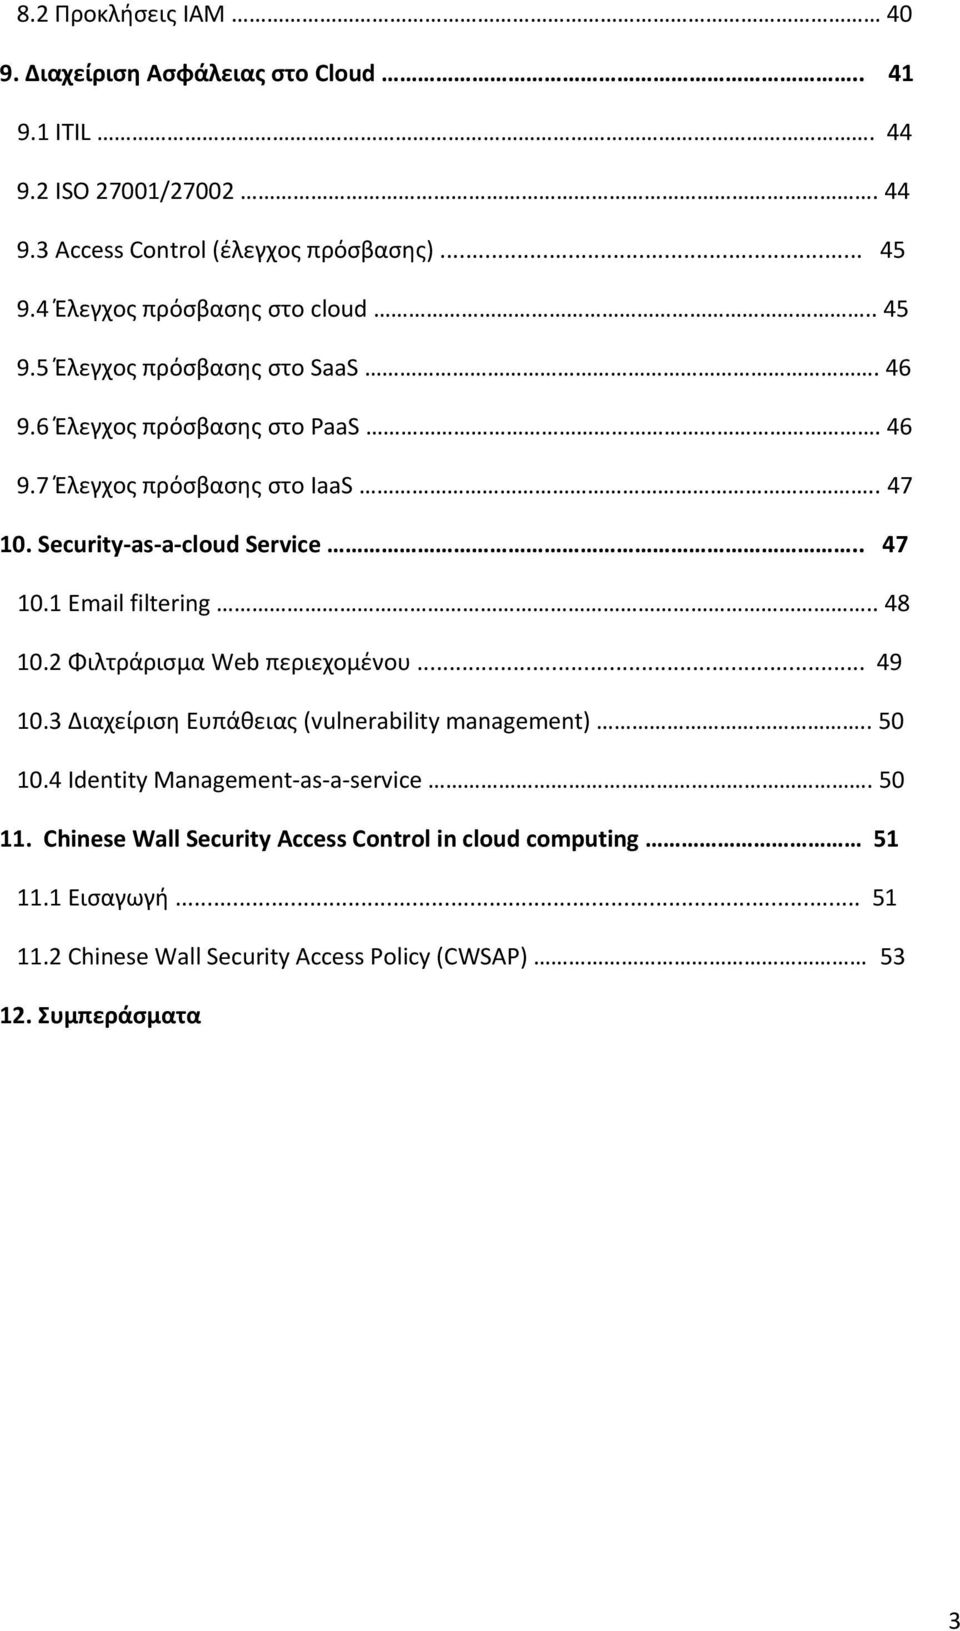 Security-as-a-cloud Service.. 47 10.1 Email filtering.. 48 10.2 Φιλτράρισμα Web περιεχομένου... 49 10.3 Διαχείριση Ευπάθειας (vulnerability management).. 50 10.